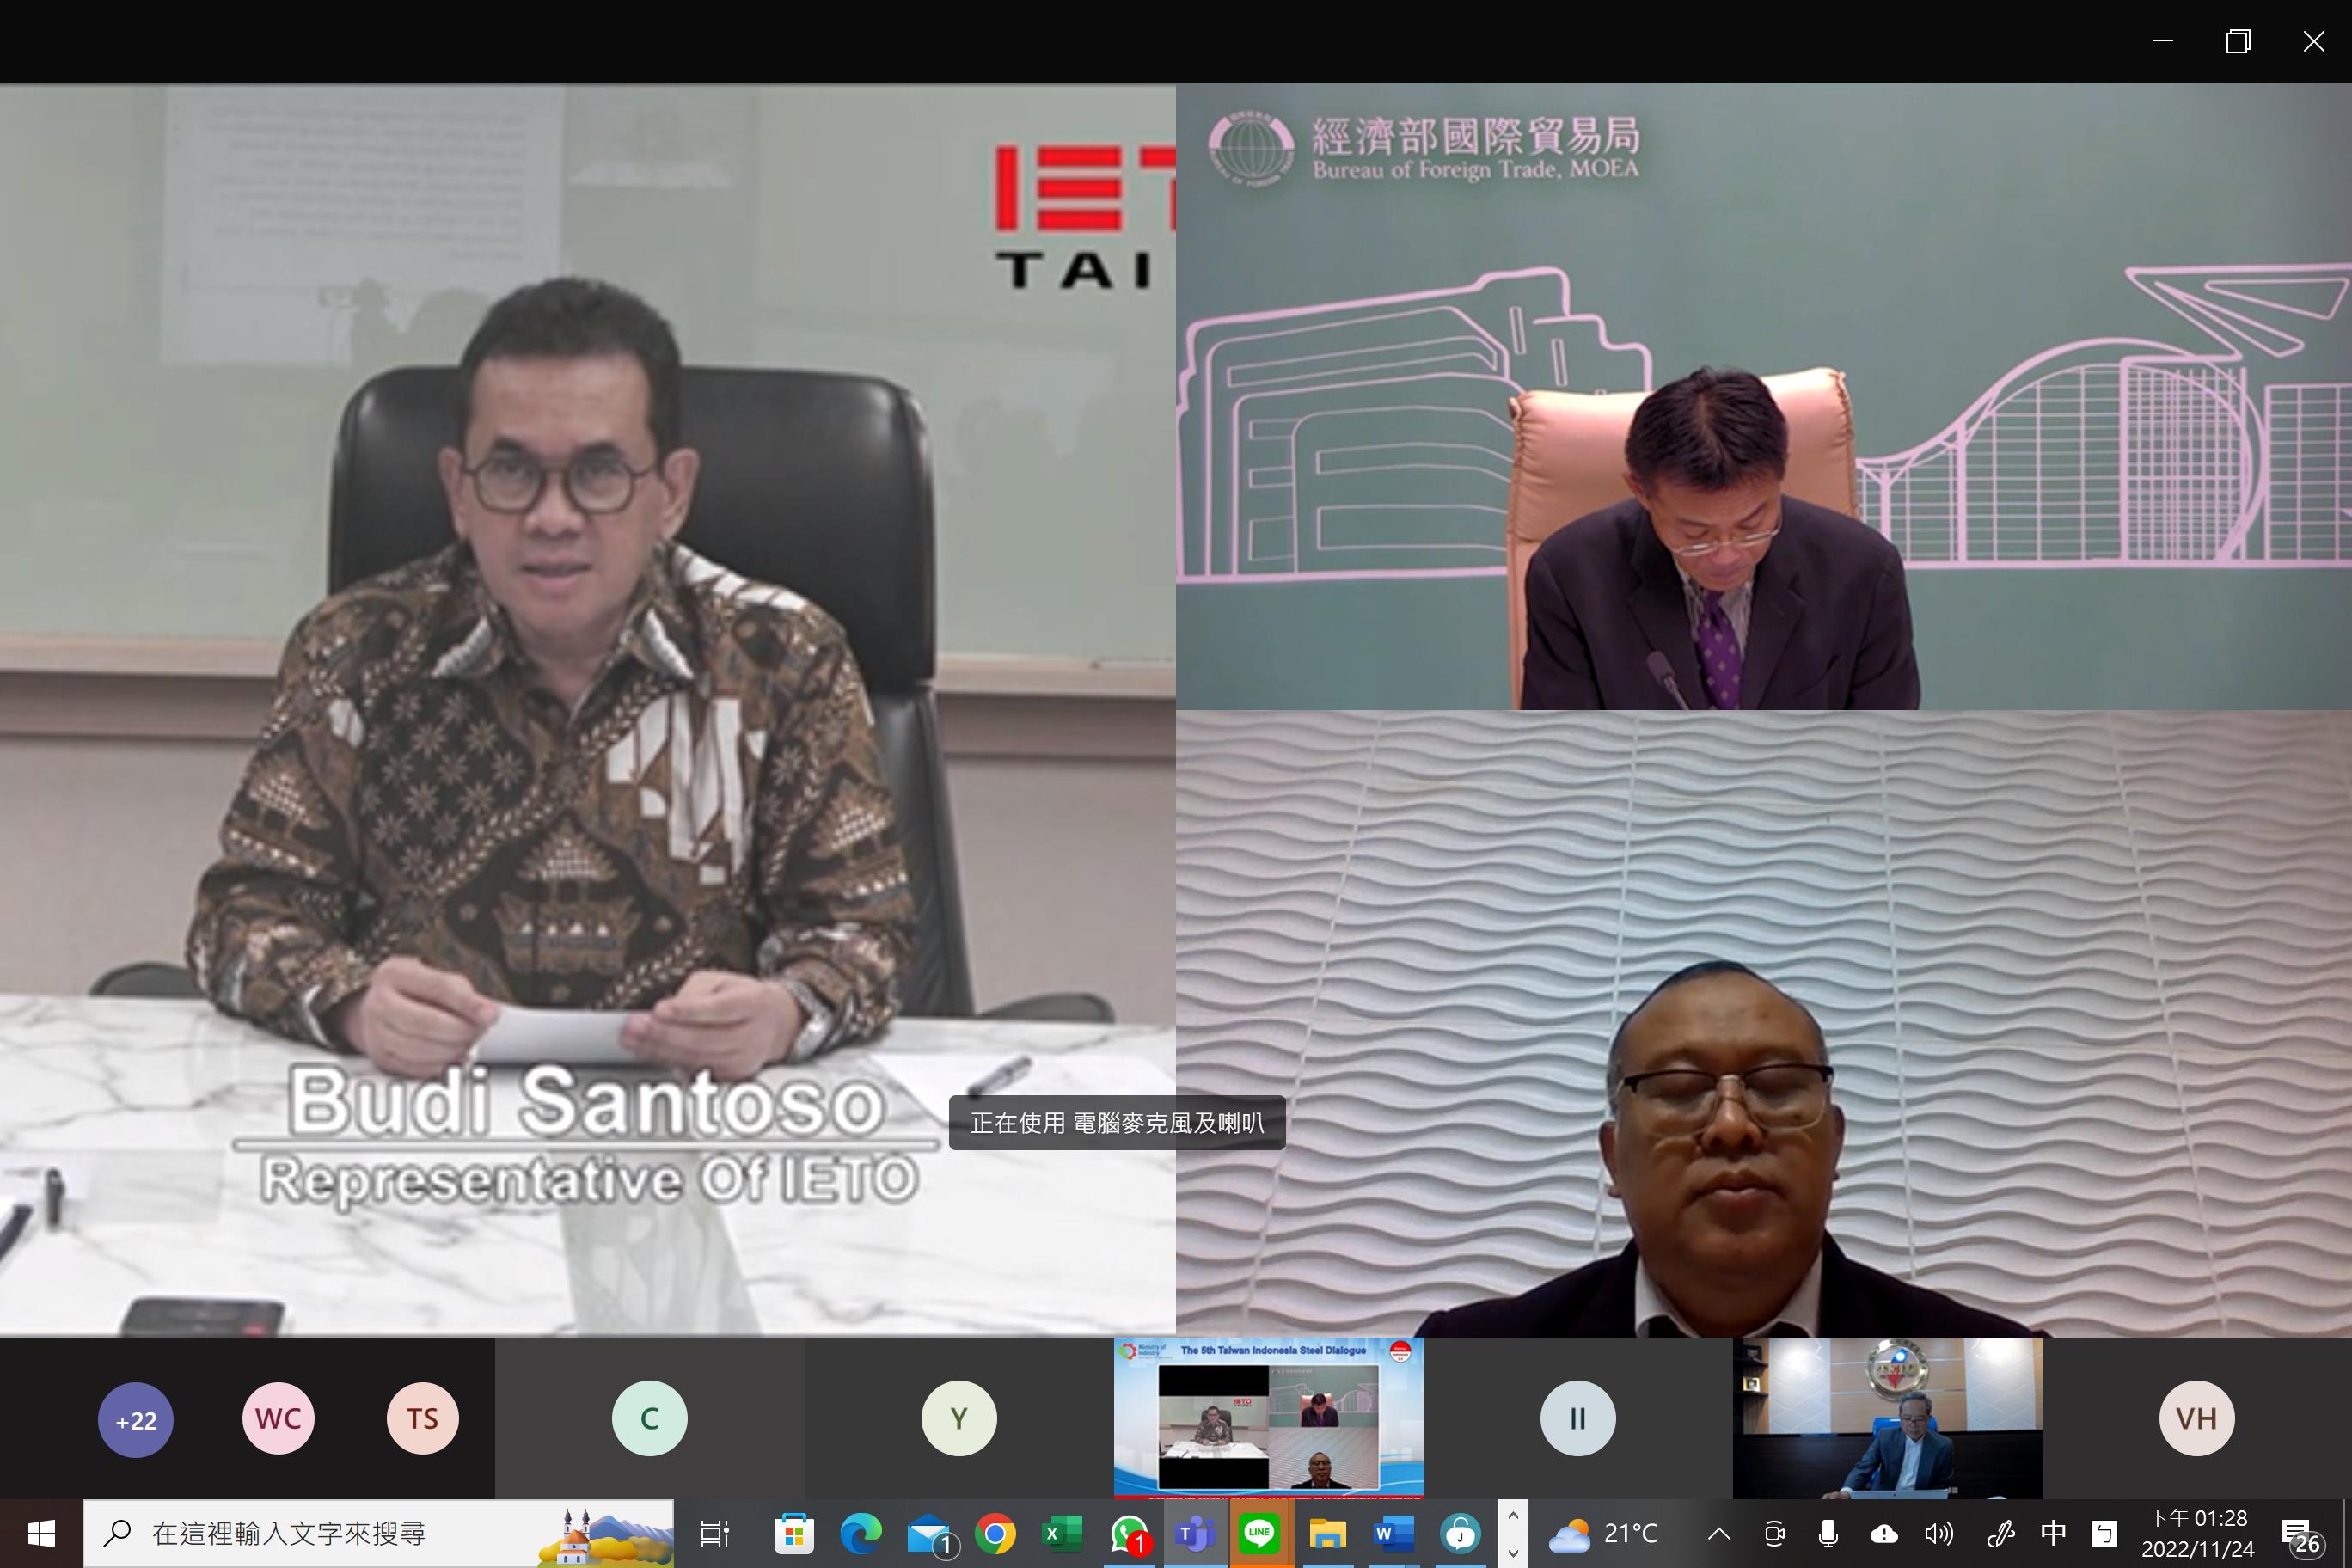 Penyelenggaraan the 5th Steel Dialogue untuk Memperkuat Kerja Sama Industri Baja antara Indonesia & Taiwan